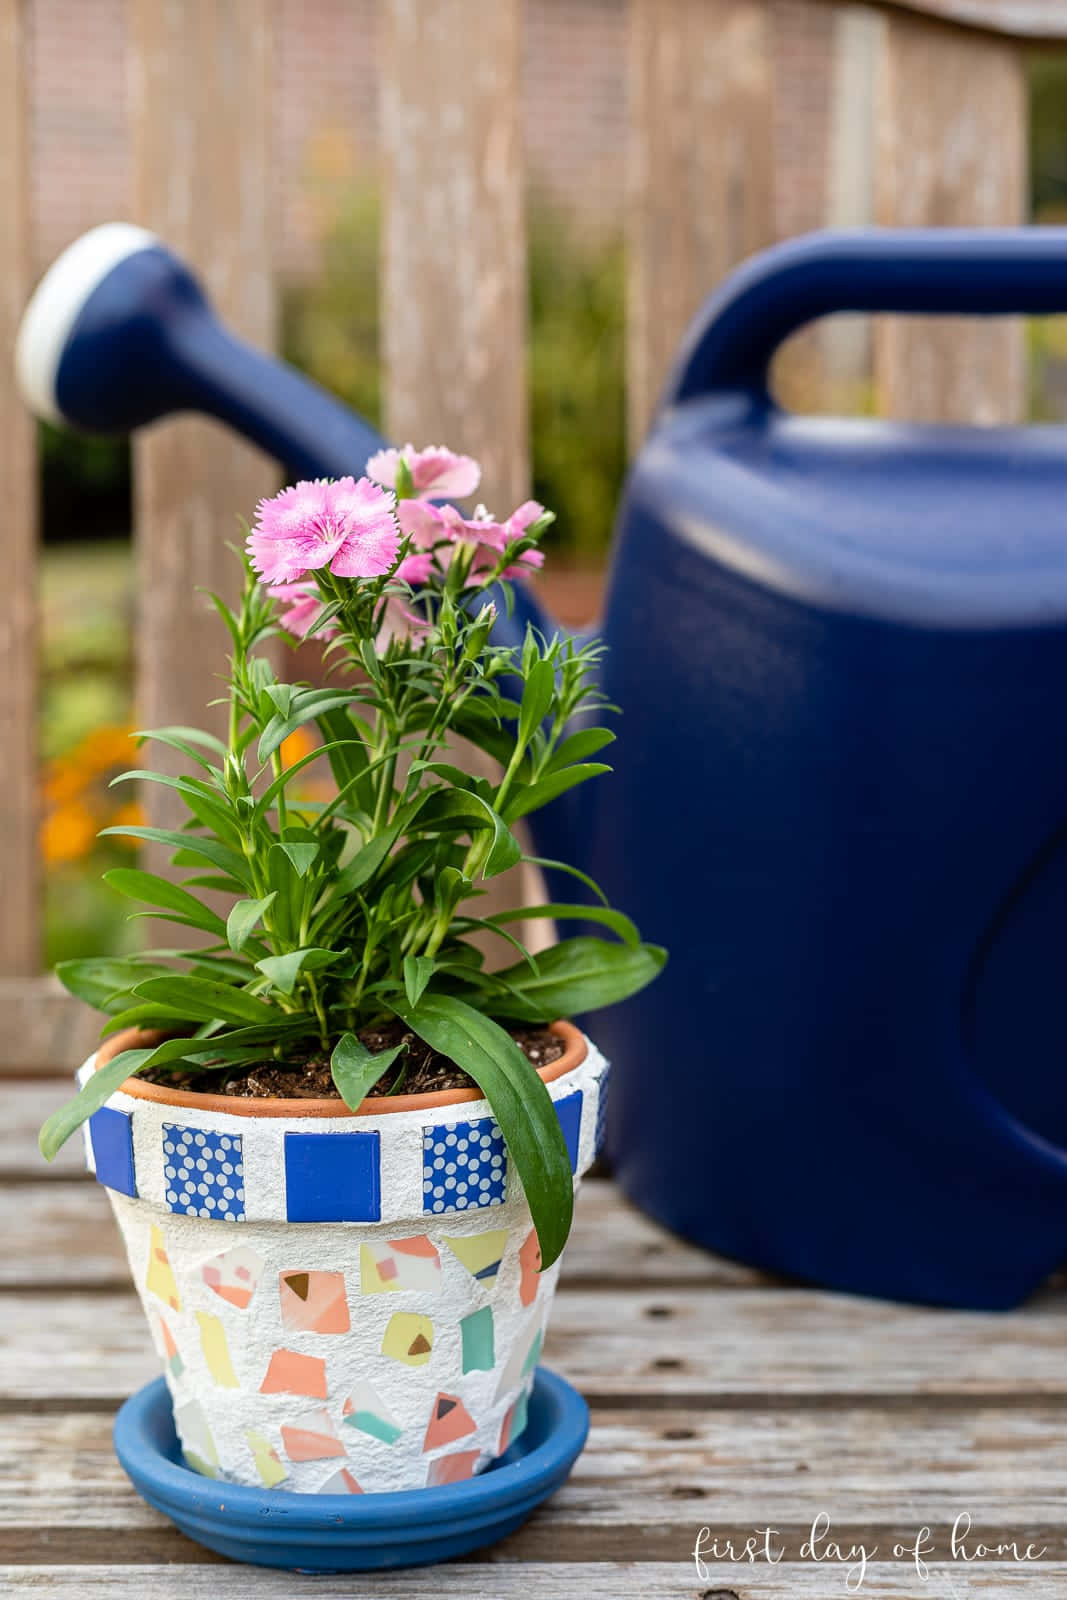 "A lovely flower pot brightening up your garden."